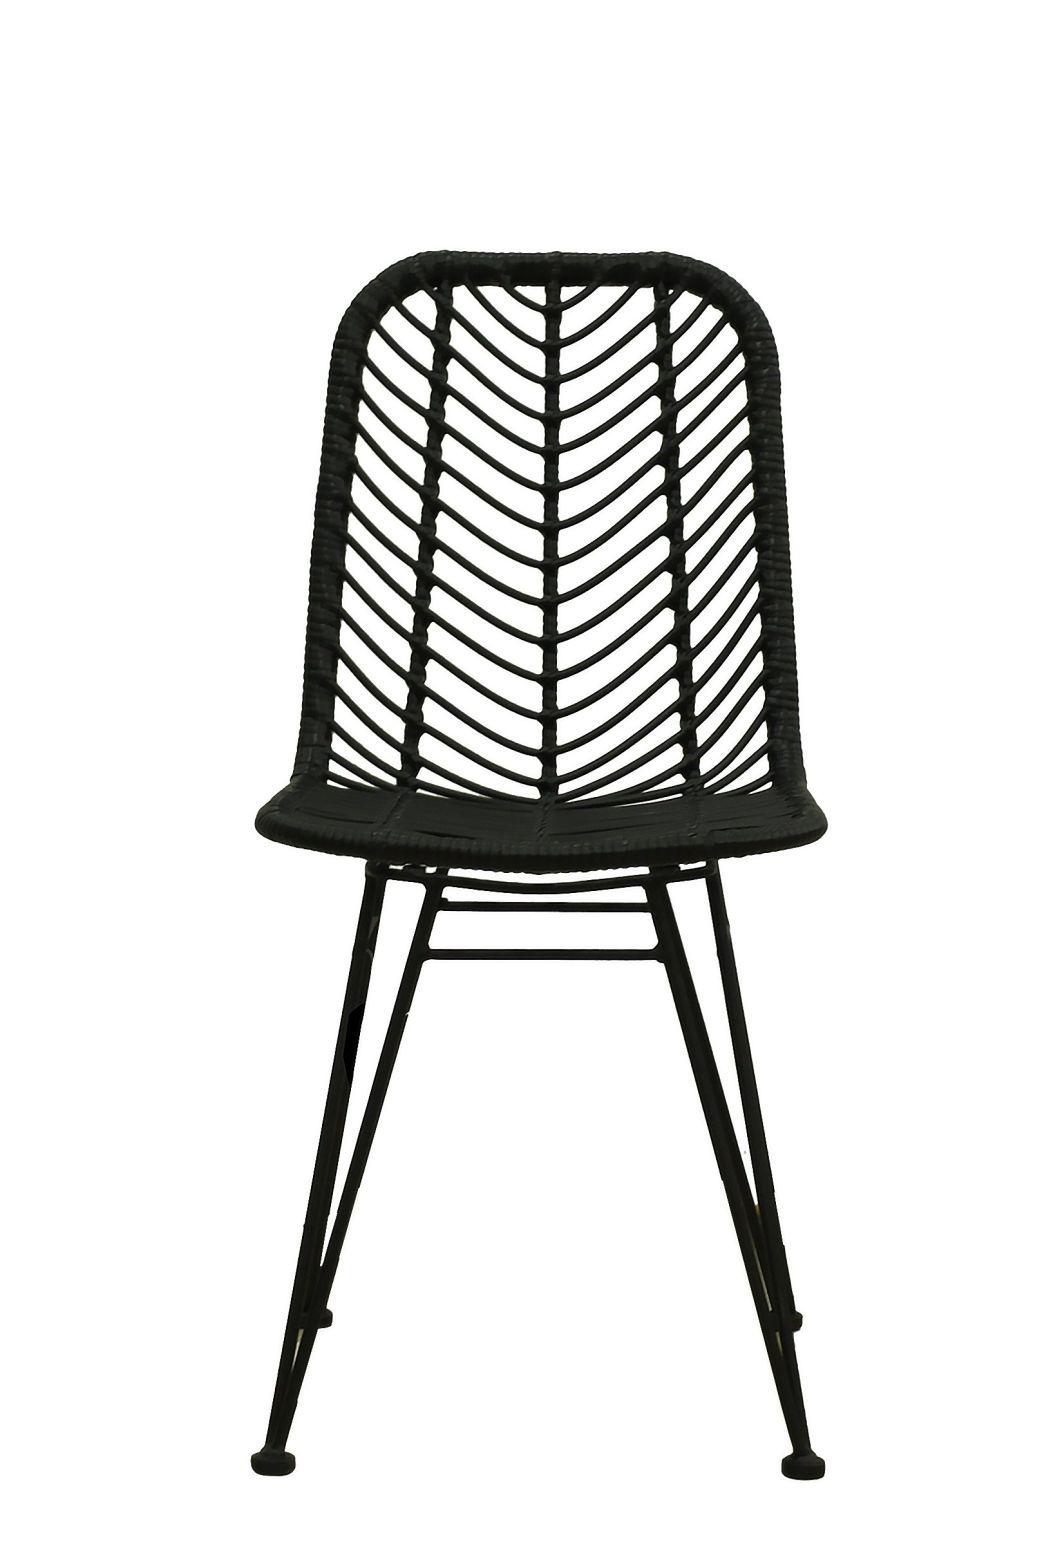 Durable Rattan Wicker Coffee Living Garden Chairs